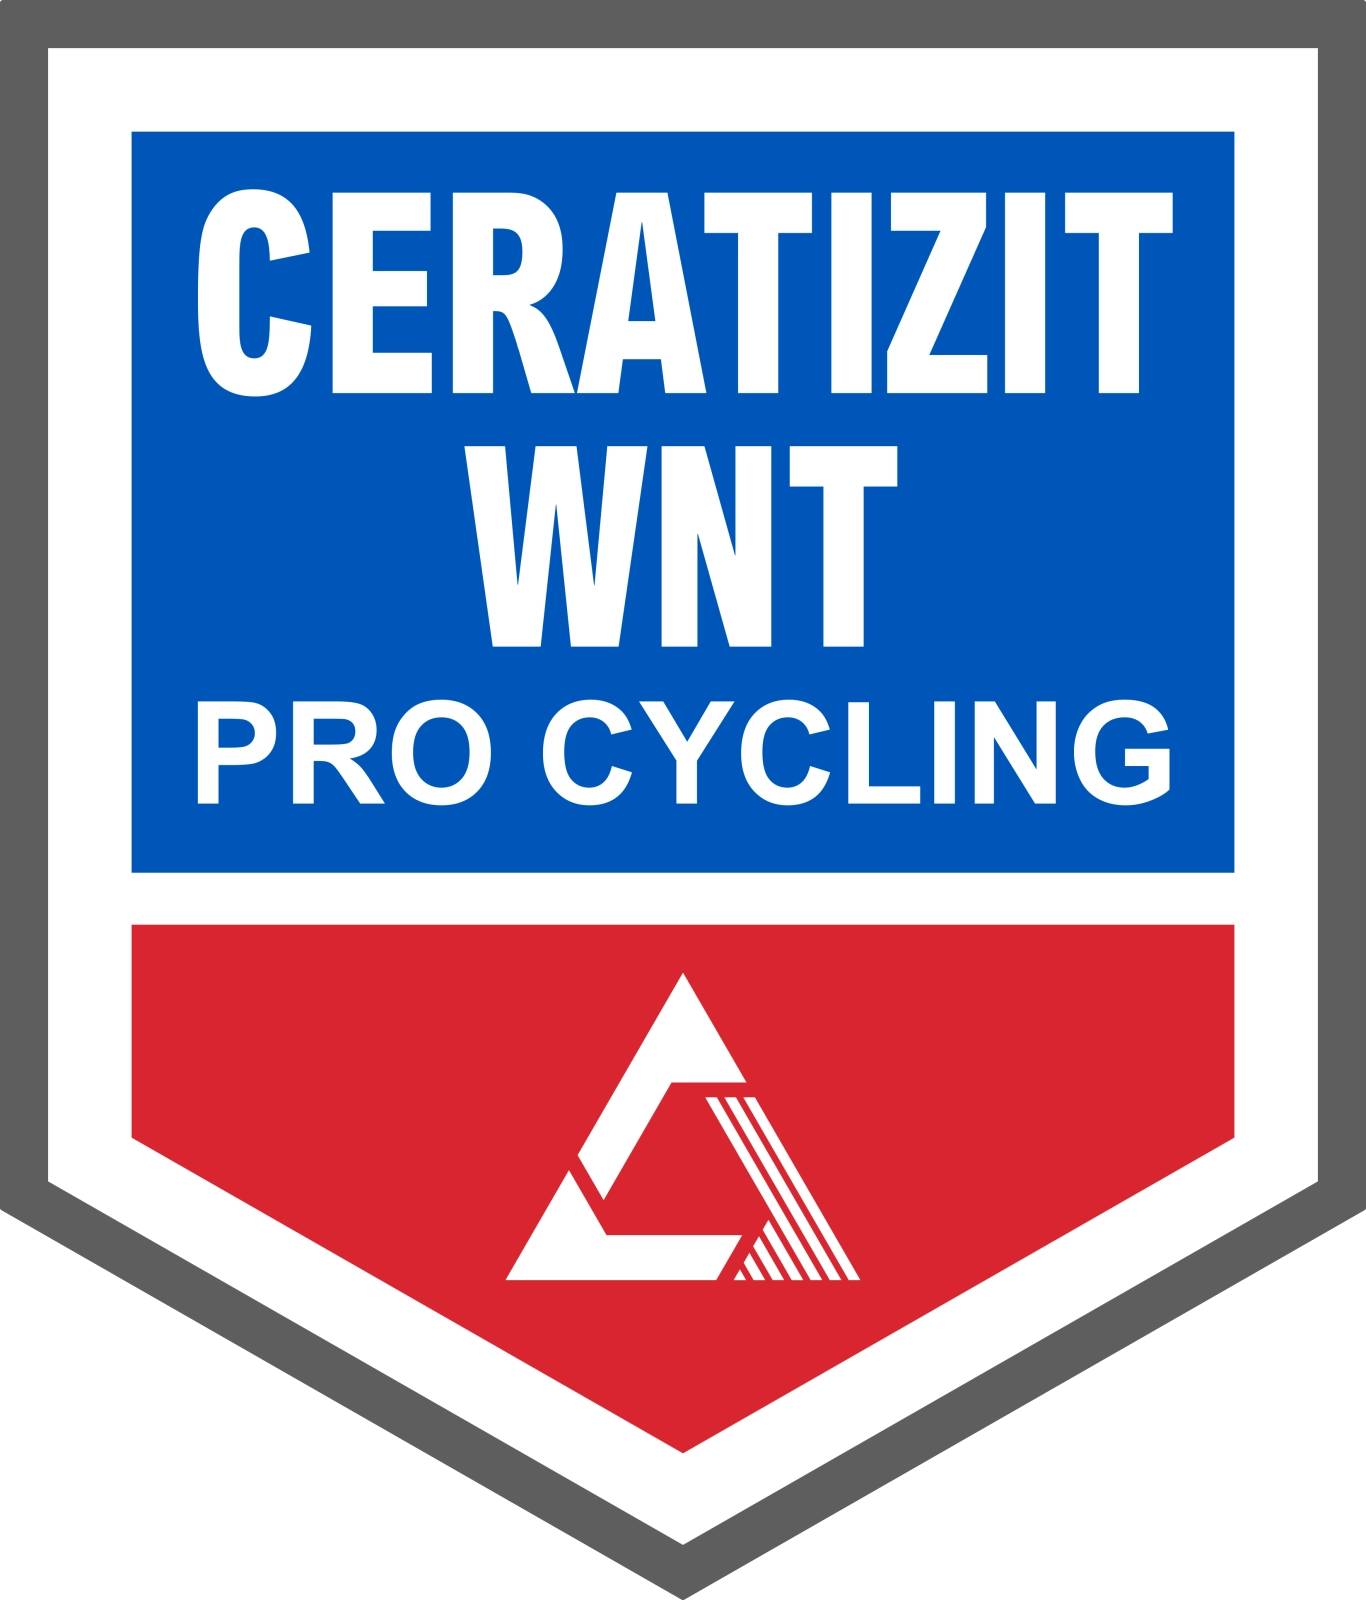 CERATIZIT WNT PRO CYCLING